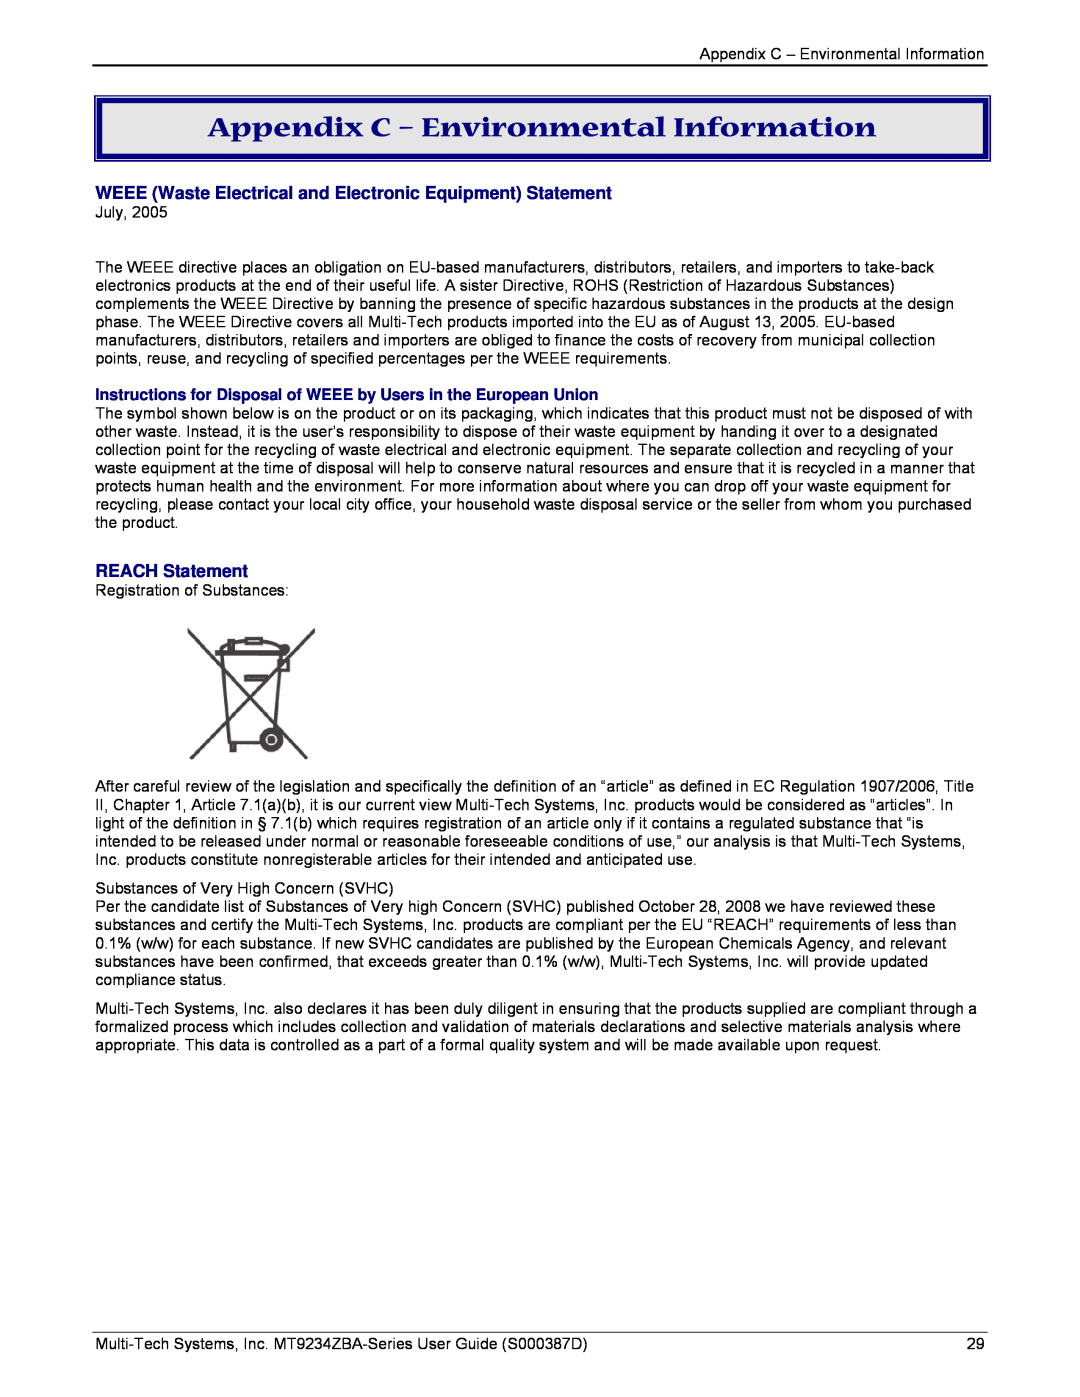 Multi-Tech Systems MT9234ZBA manual Appendix C - Environmental Information, REACH Statement 